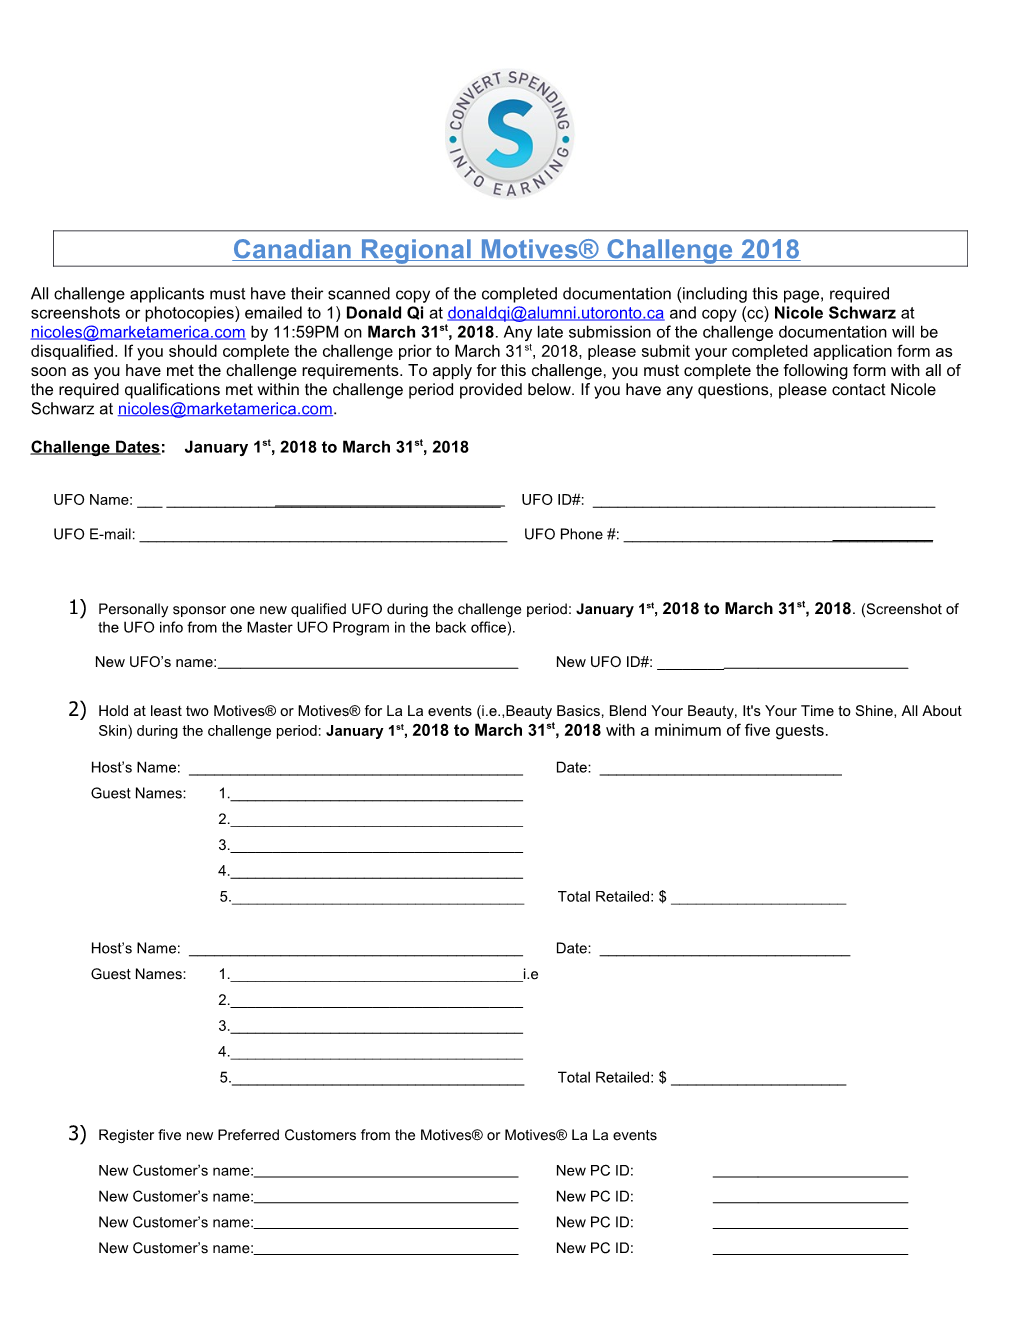 Canadian Regional Motives Challenge 2018